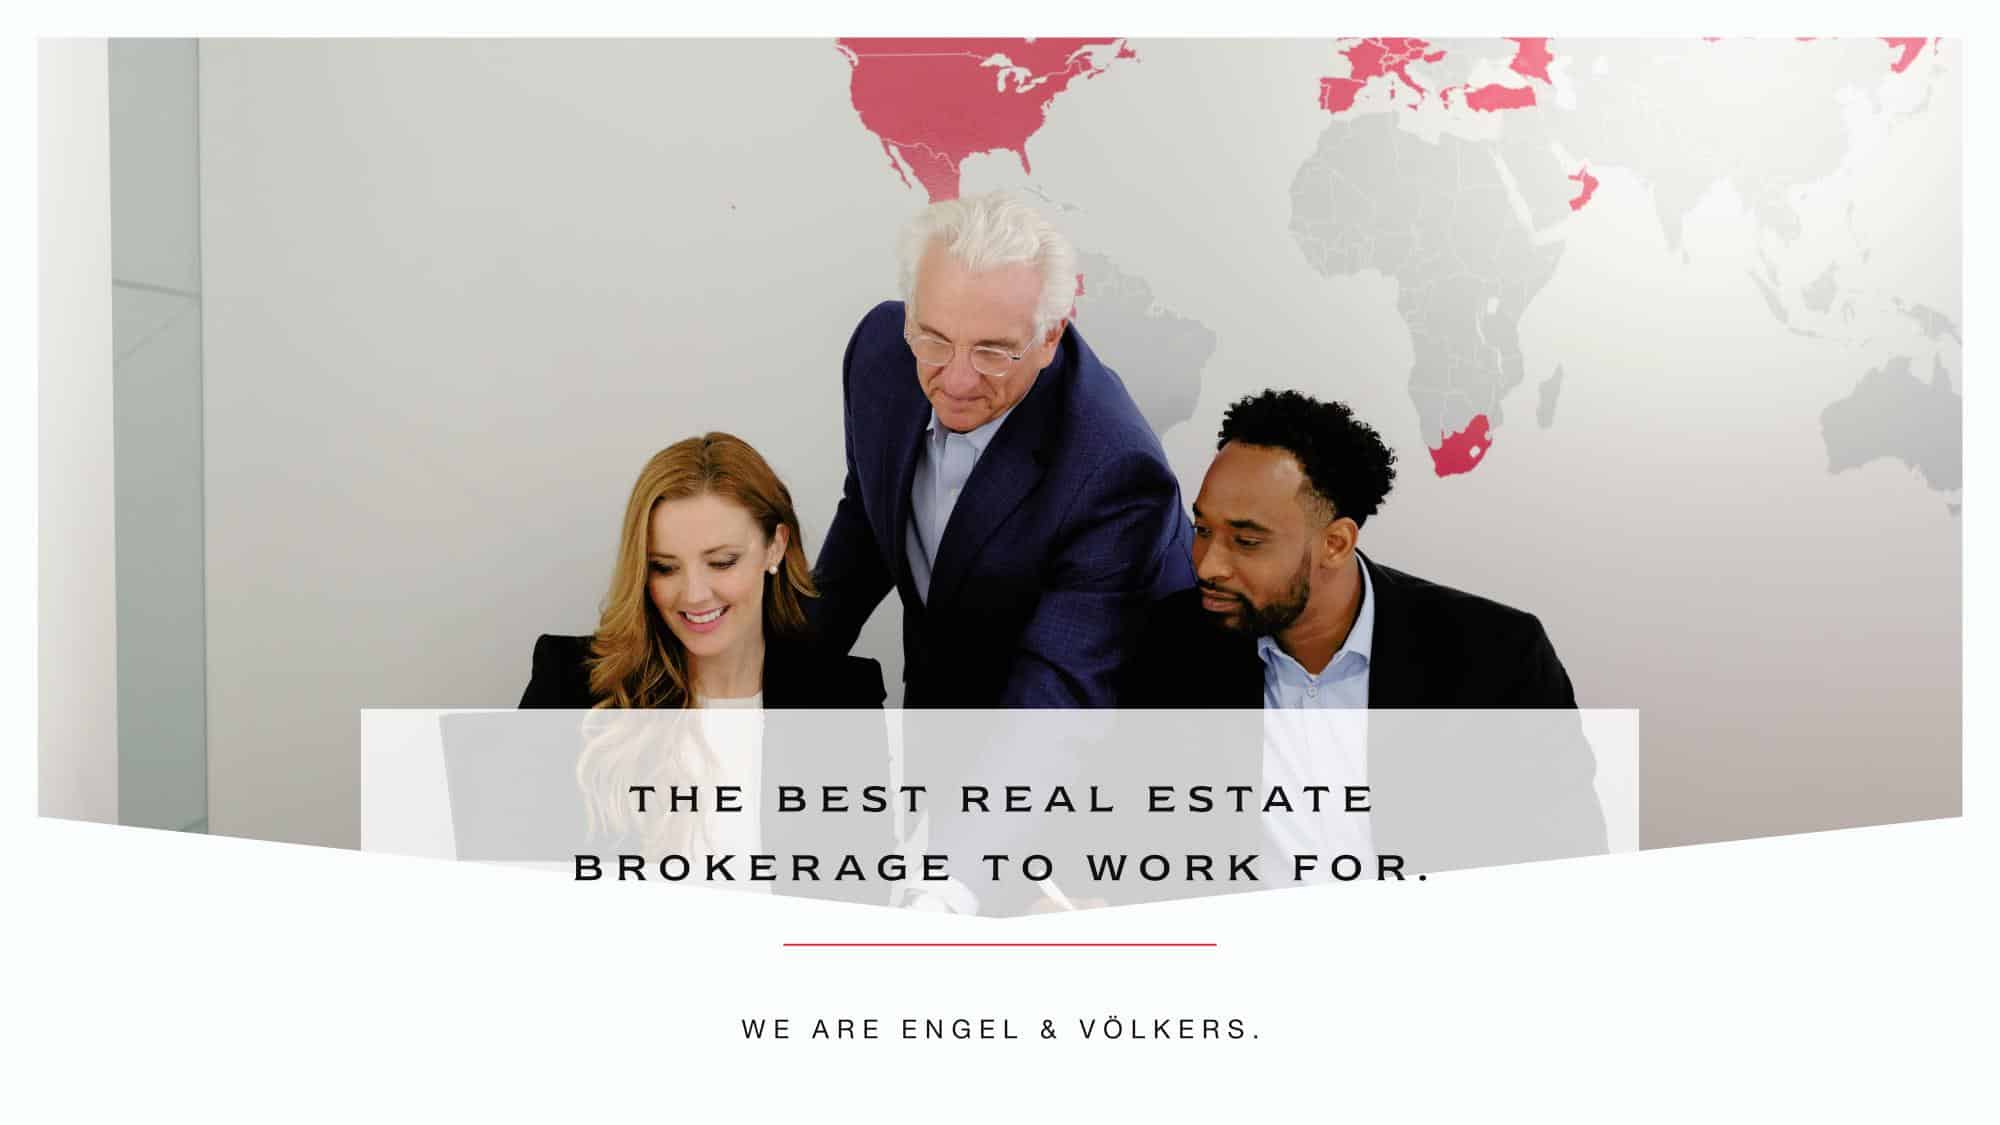 We are Engeland Völkers - the best real estate brokerage to work for in southwest florida